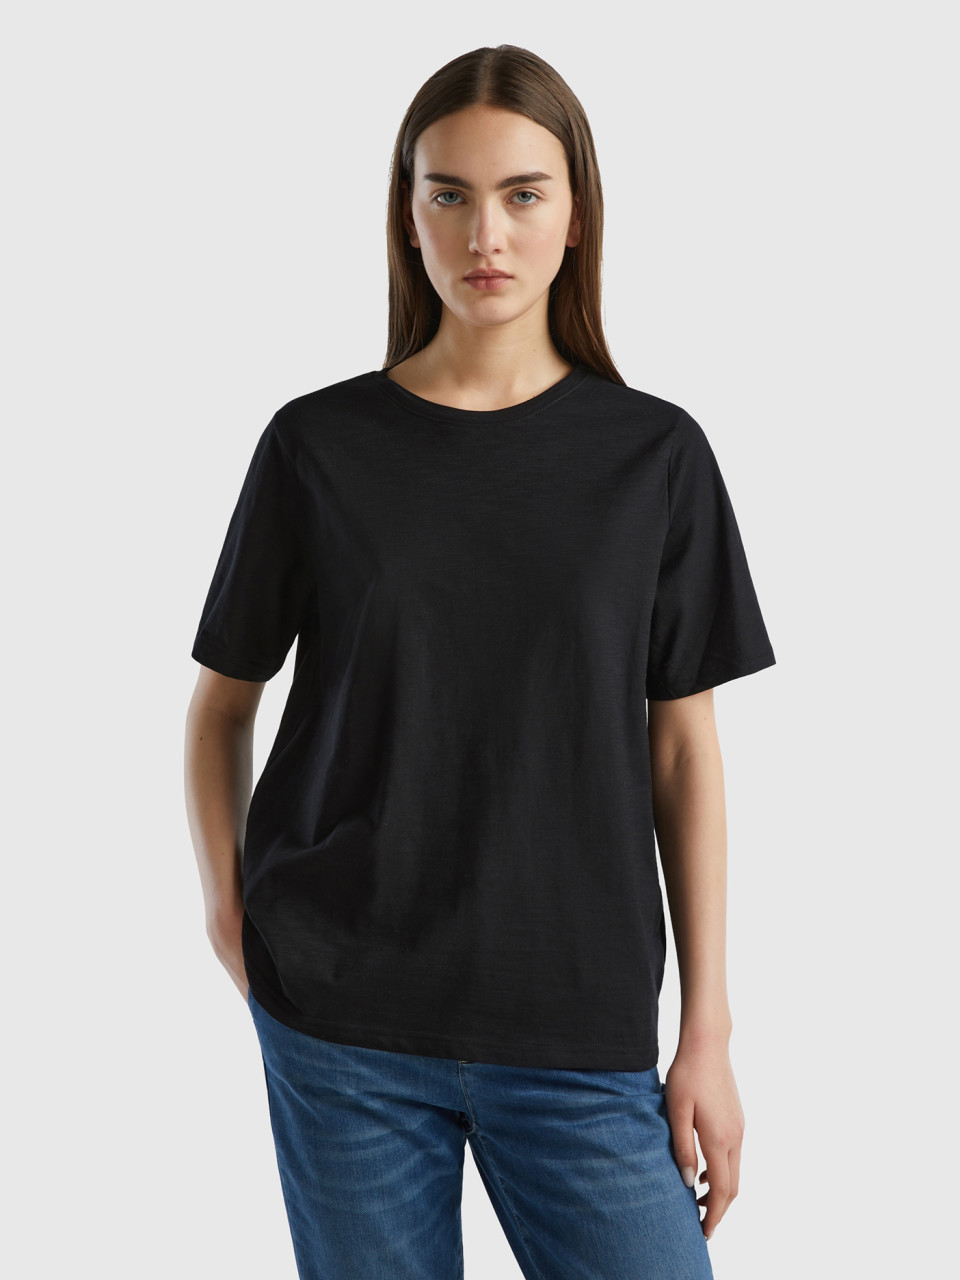 Benetton, Crew Neck T-shirt In Slub Cotton, Black, Women